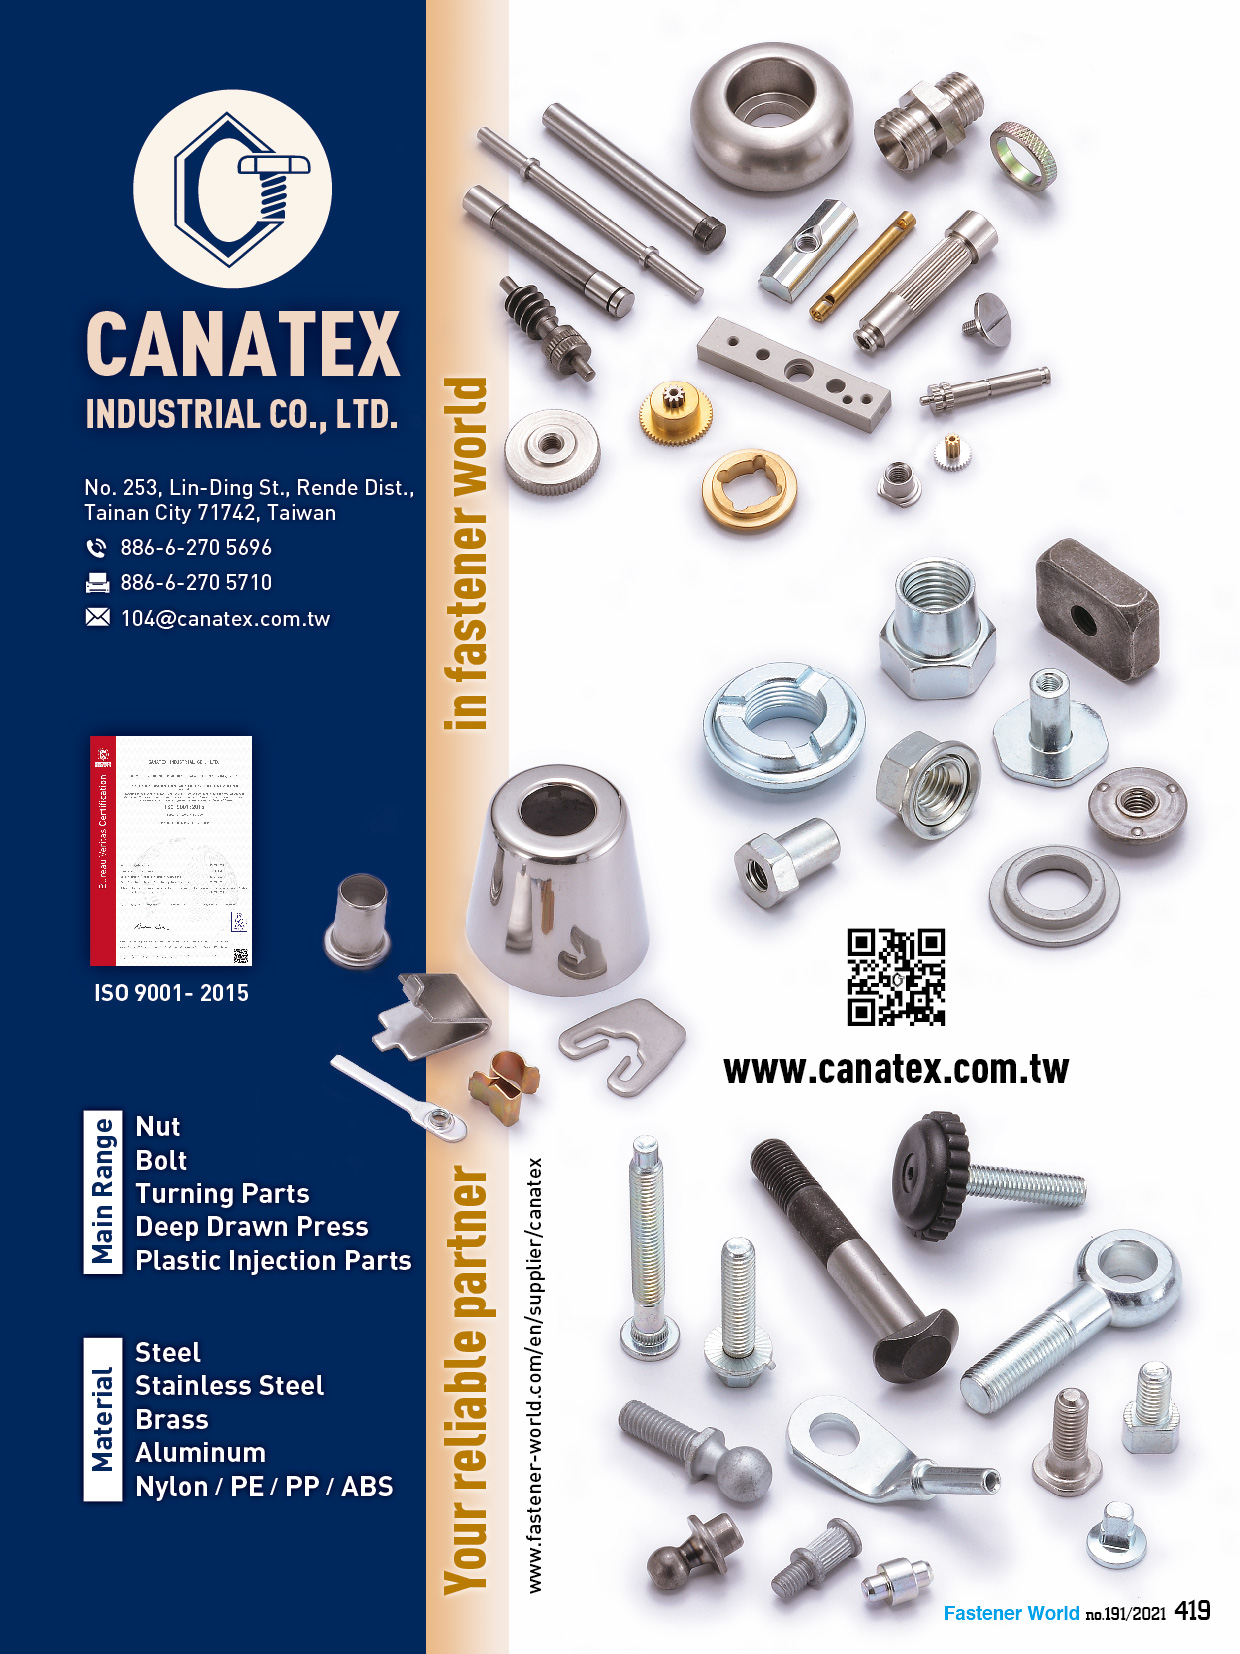 CANATEX INDUSTRIAL CO., LTD. , Nut, Bolt, Turning Parts, Deep Drawn Press, Plastic Injection Parts